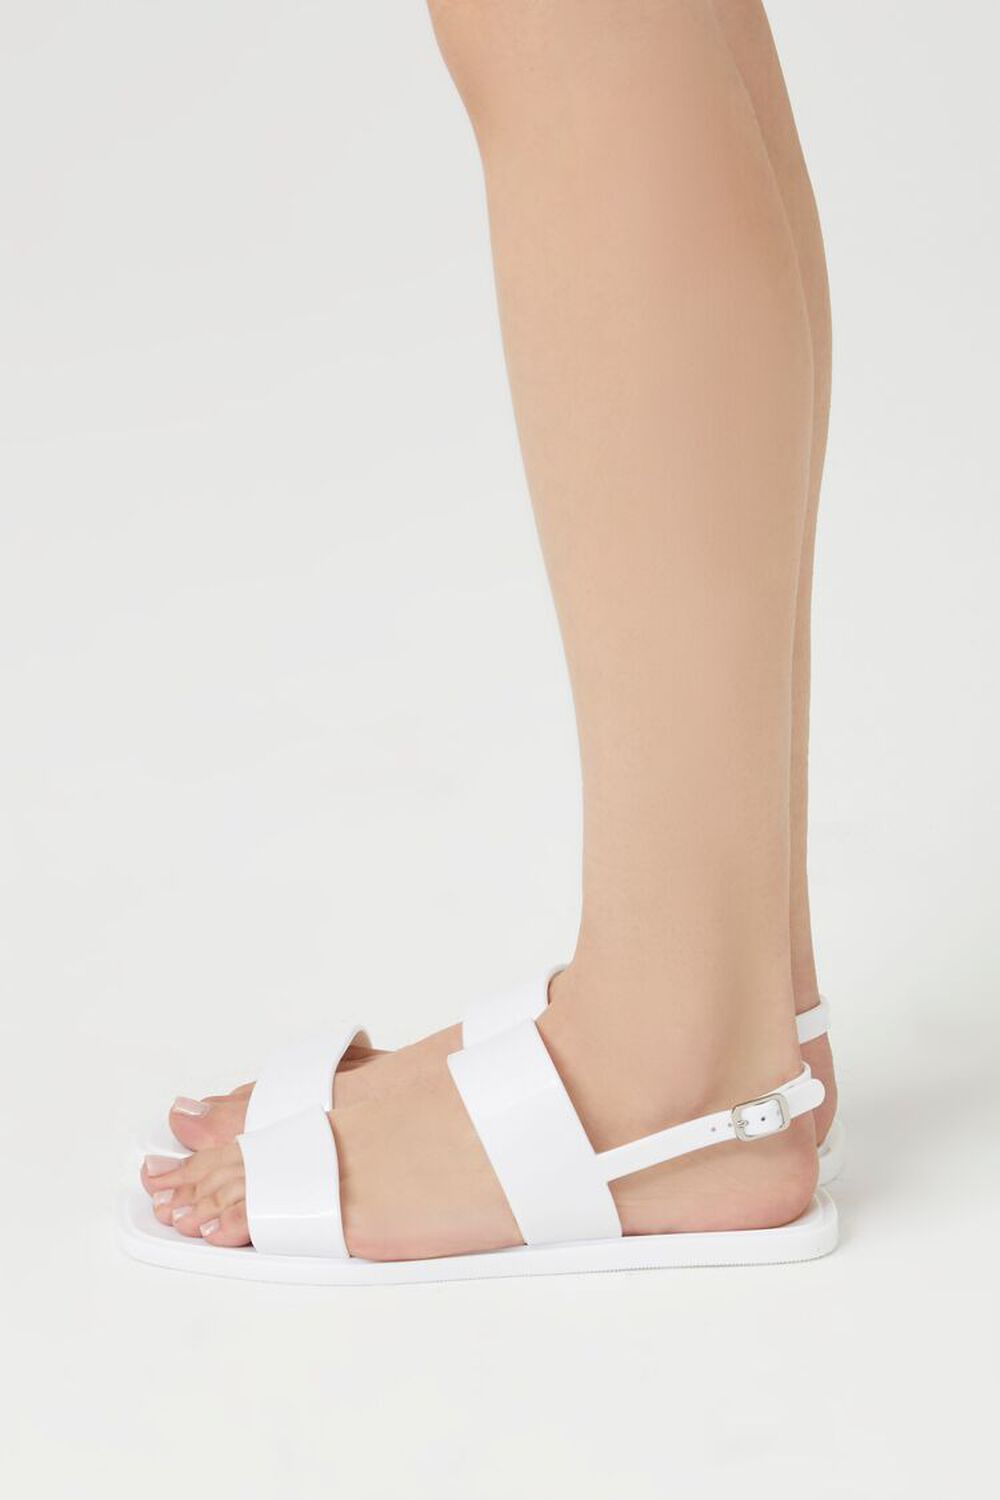 WHITE Dual-Strap Square-Toe Sandals, image 2